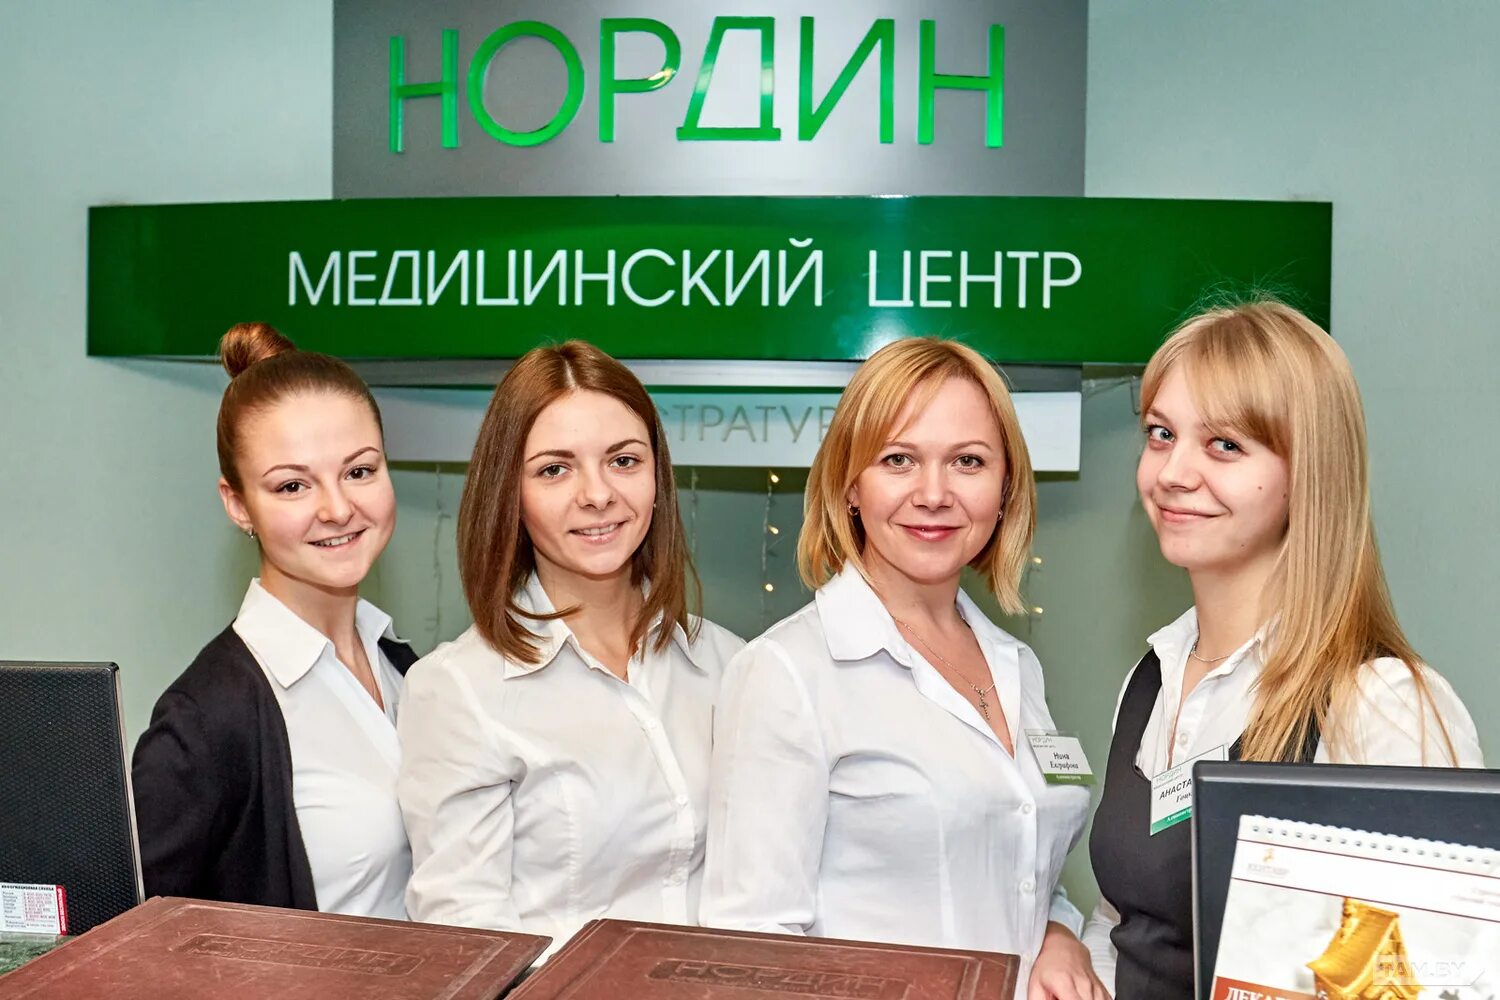 Нордин медицинский центр. Нордин медицинский центр в Минске. Форма администратора медицинского центра. Нордин медицинский центр в Минске врачи.